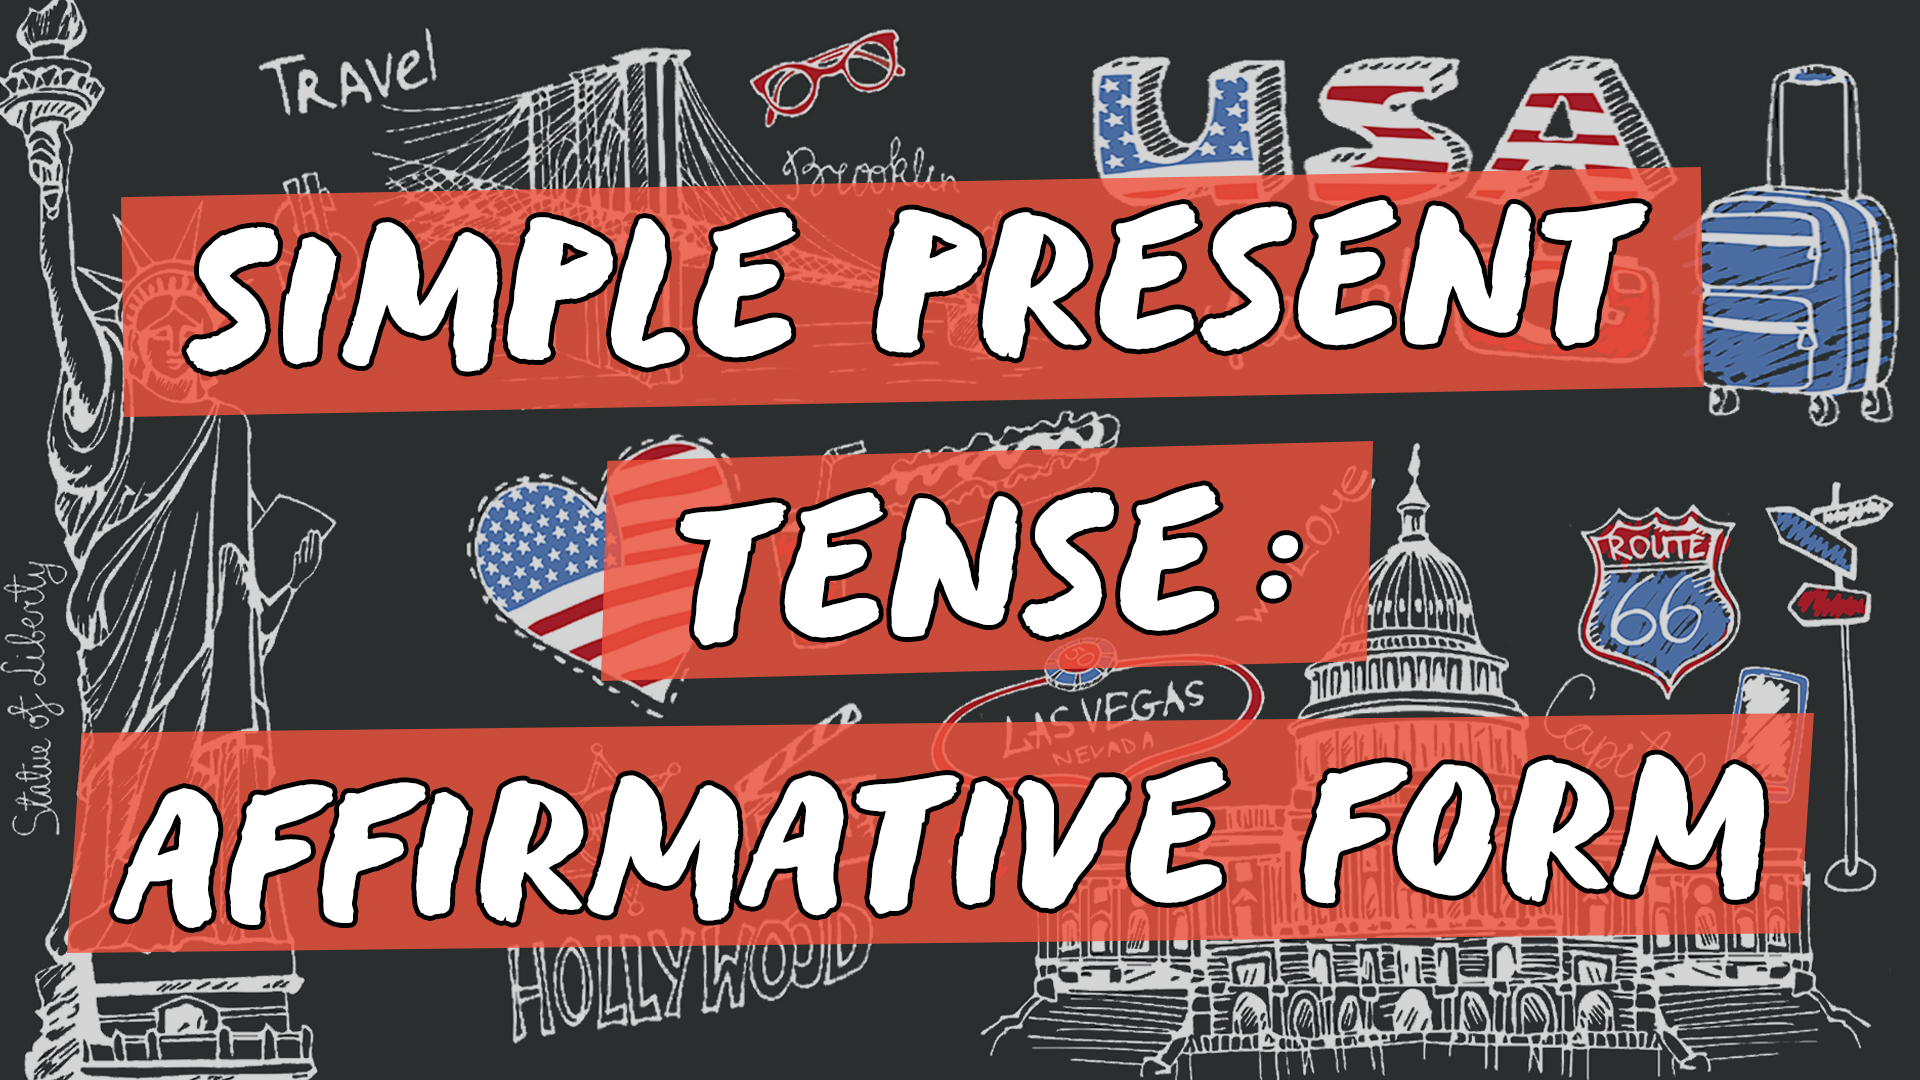 "Simple Present Tense: Affirmative Form" escrito sobre ilustração de diversos símbolos estadunidenses